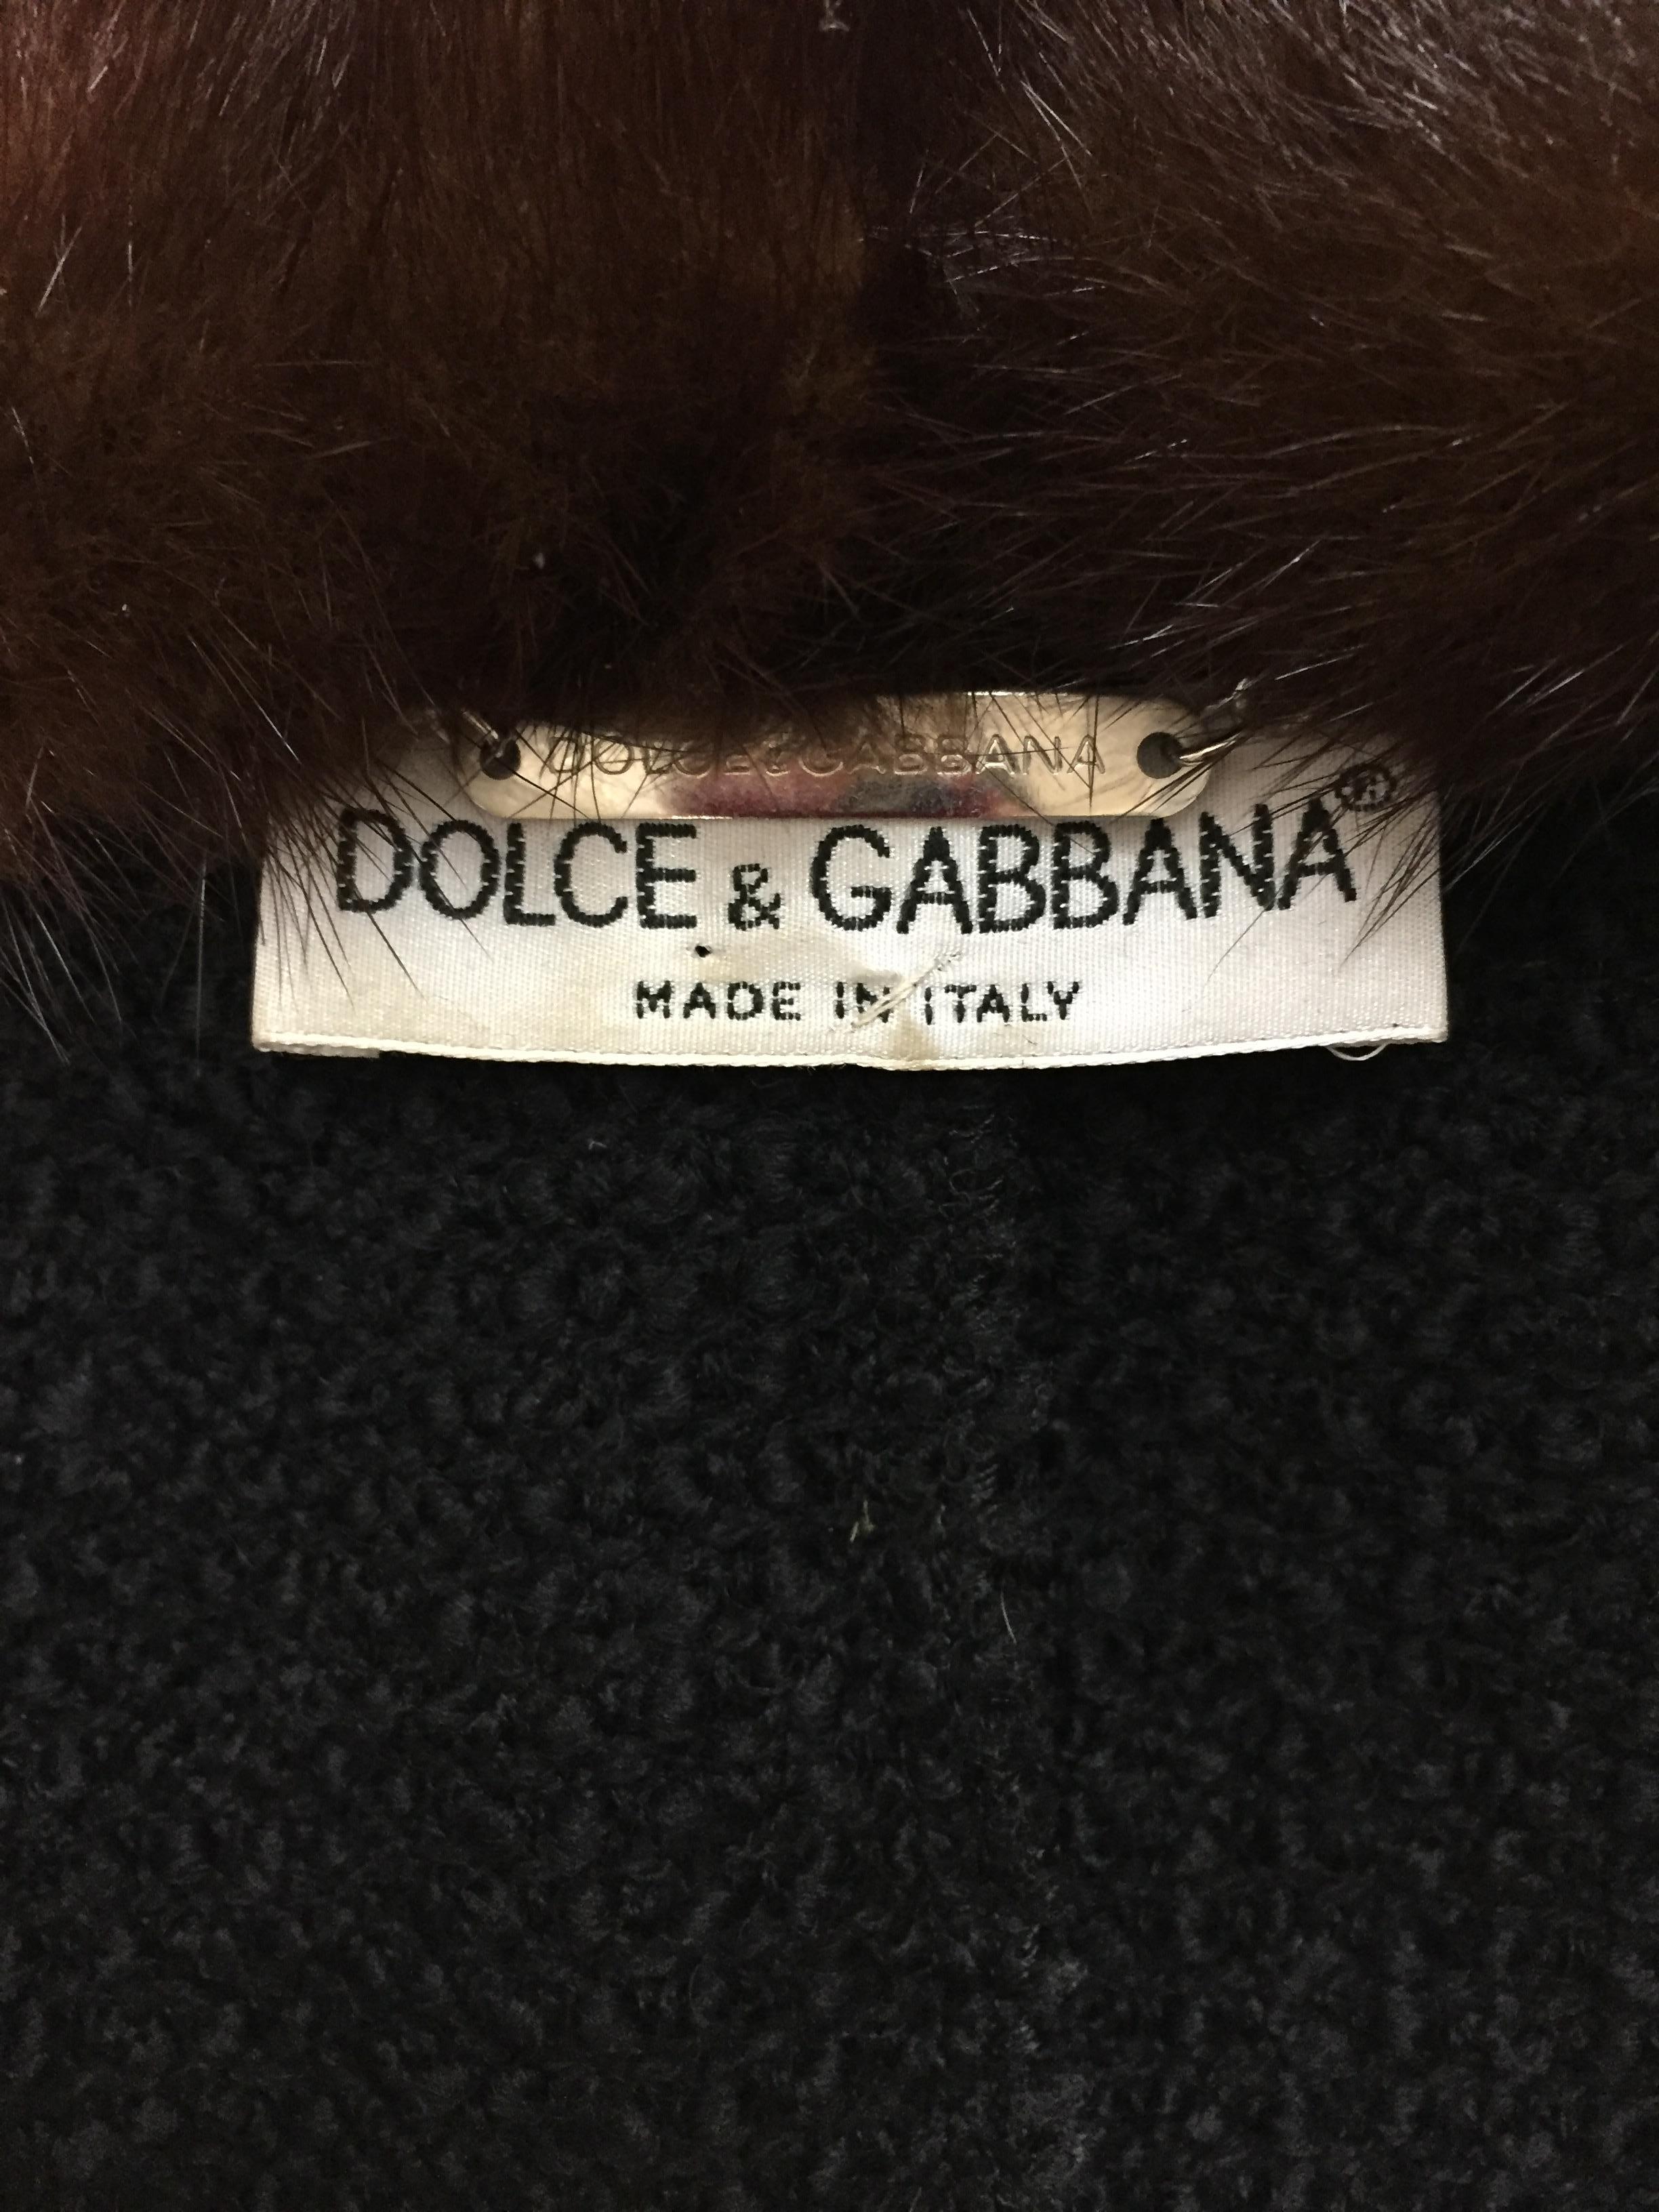 Women's S/S 1997 Dolce & Gabbana Pin-Up Black Knit Jacket & Skirt Set w Sable Fur